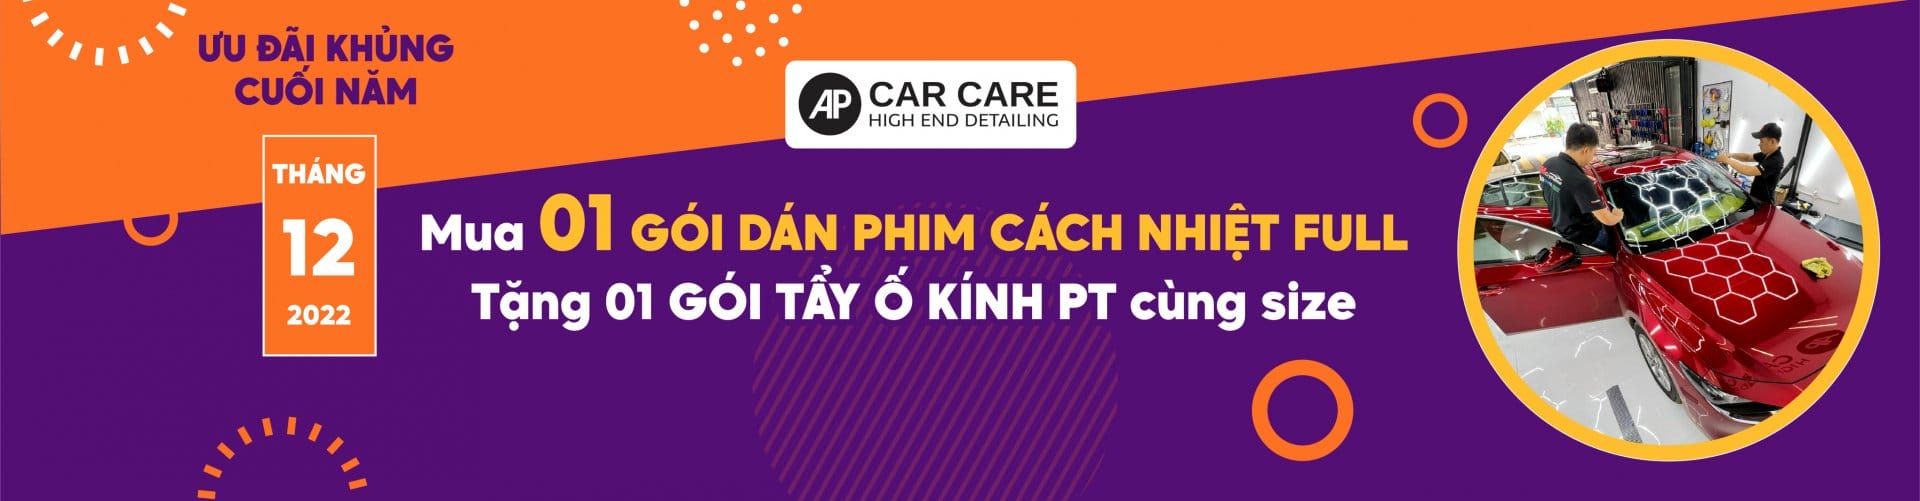 Banner Web 2 ap car care